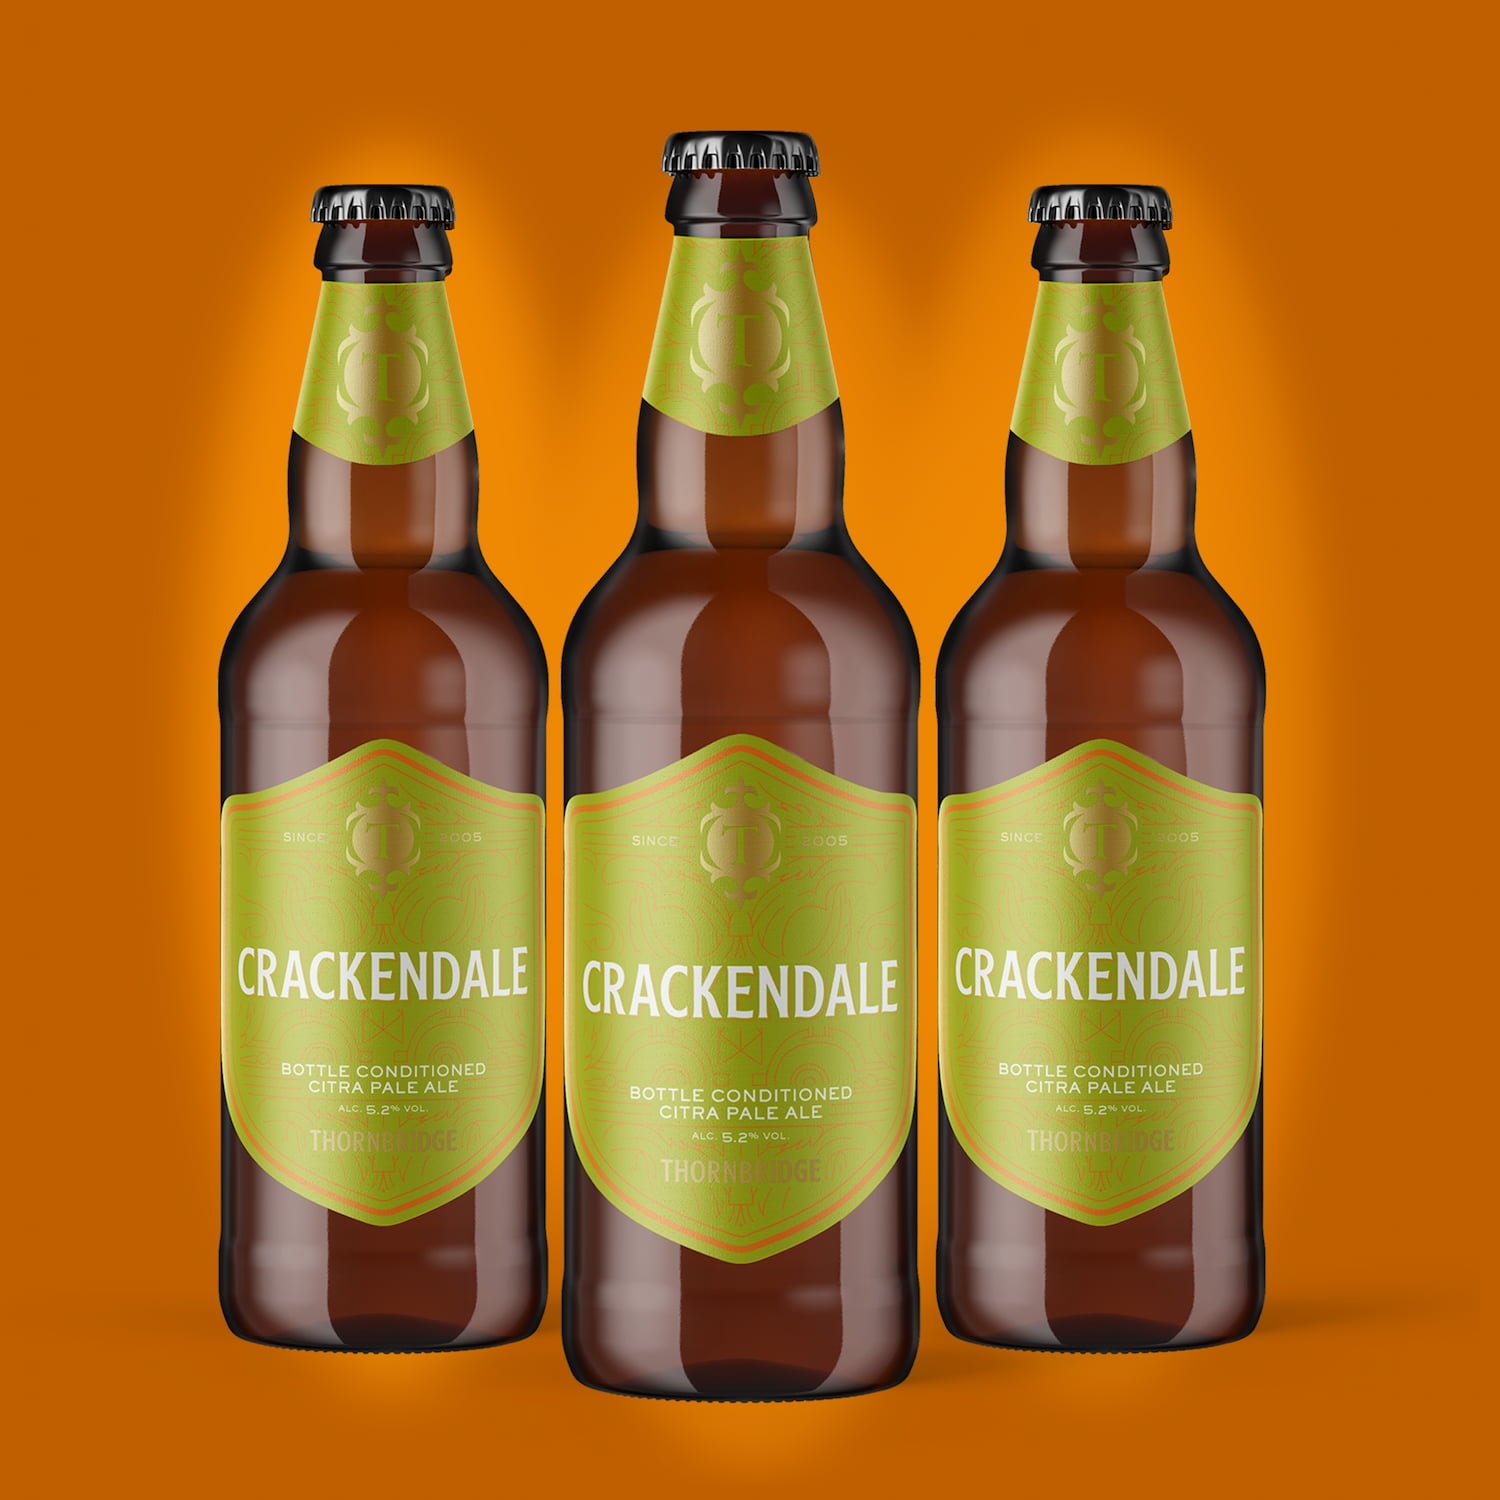 Crackendale, 5.2% Single Hopped Citra Pale Ale 8 x 500ml bottles Beer - Case Bottle Thornbridge